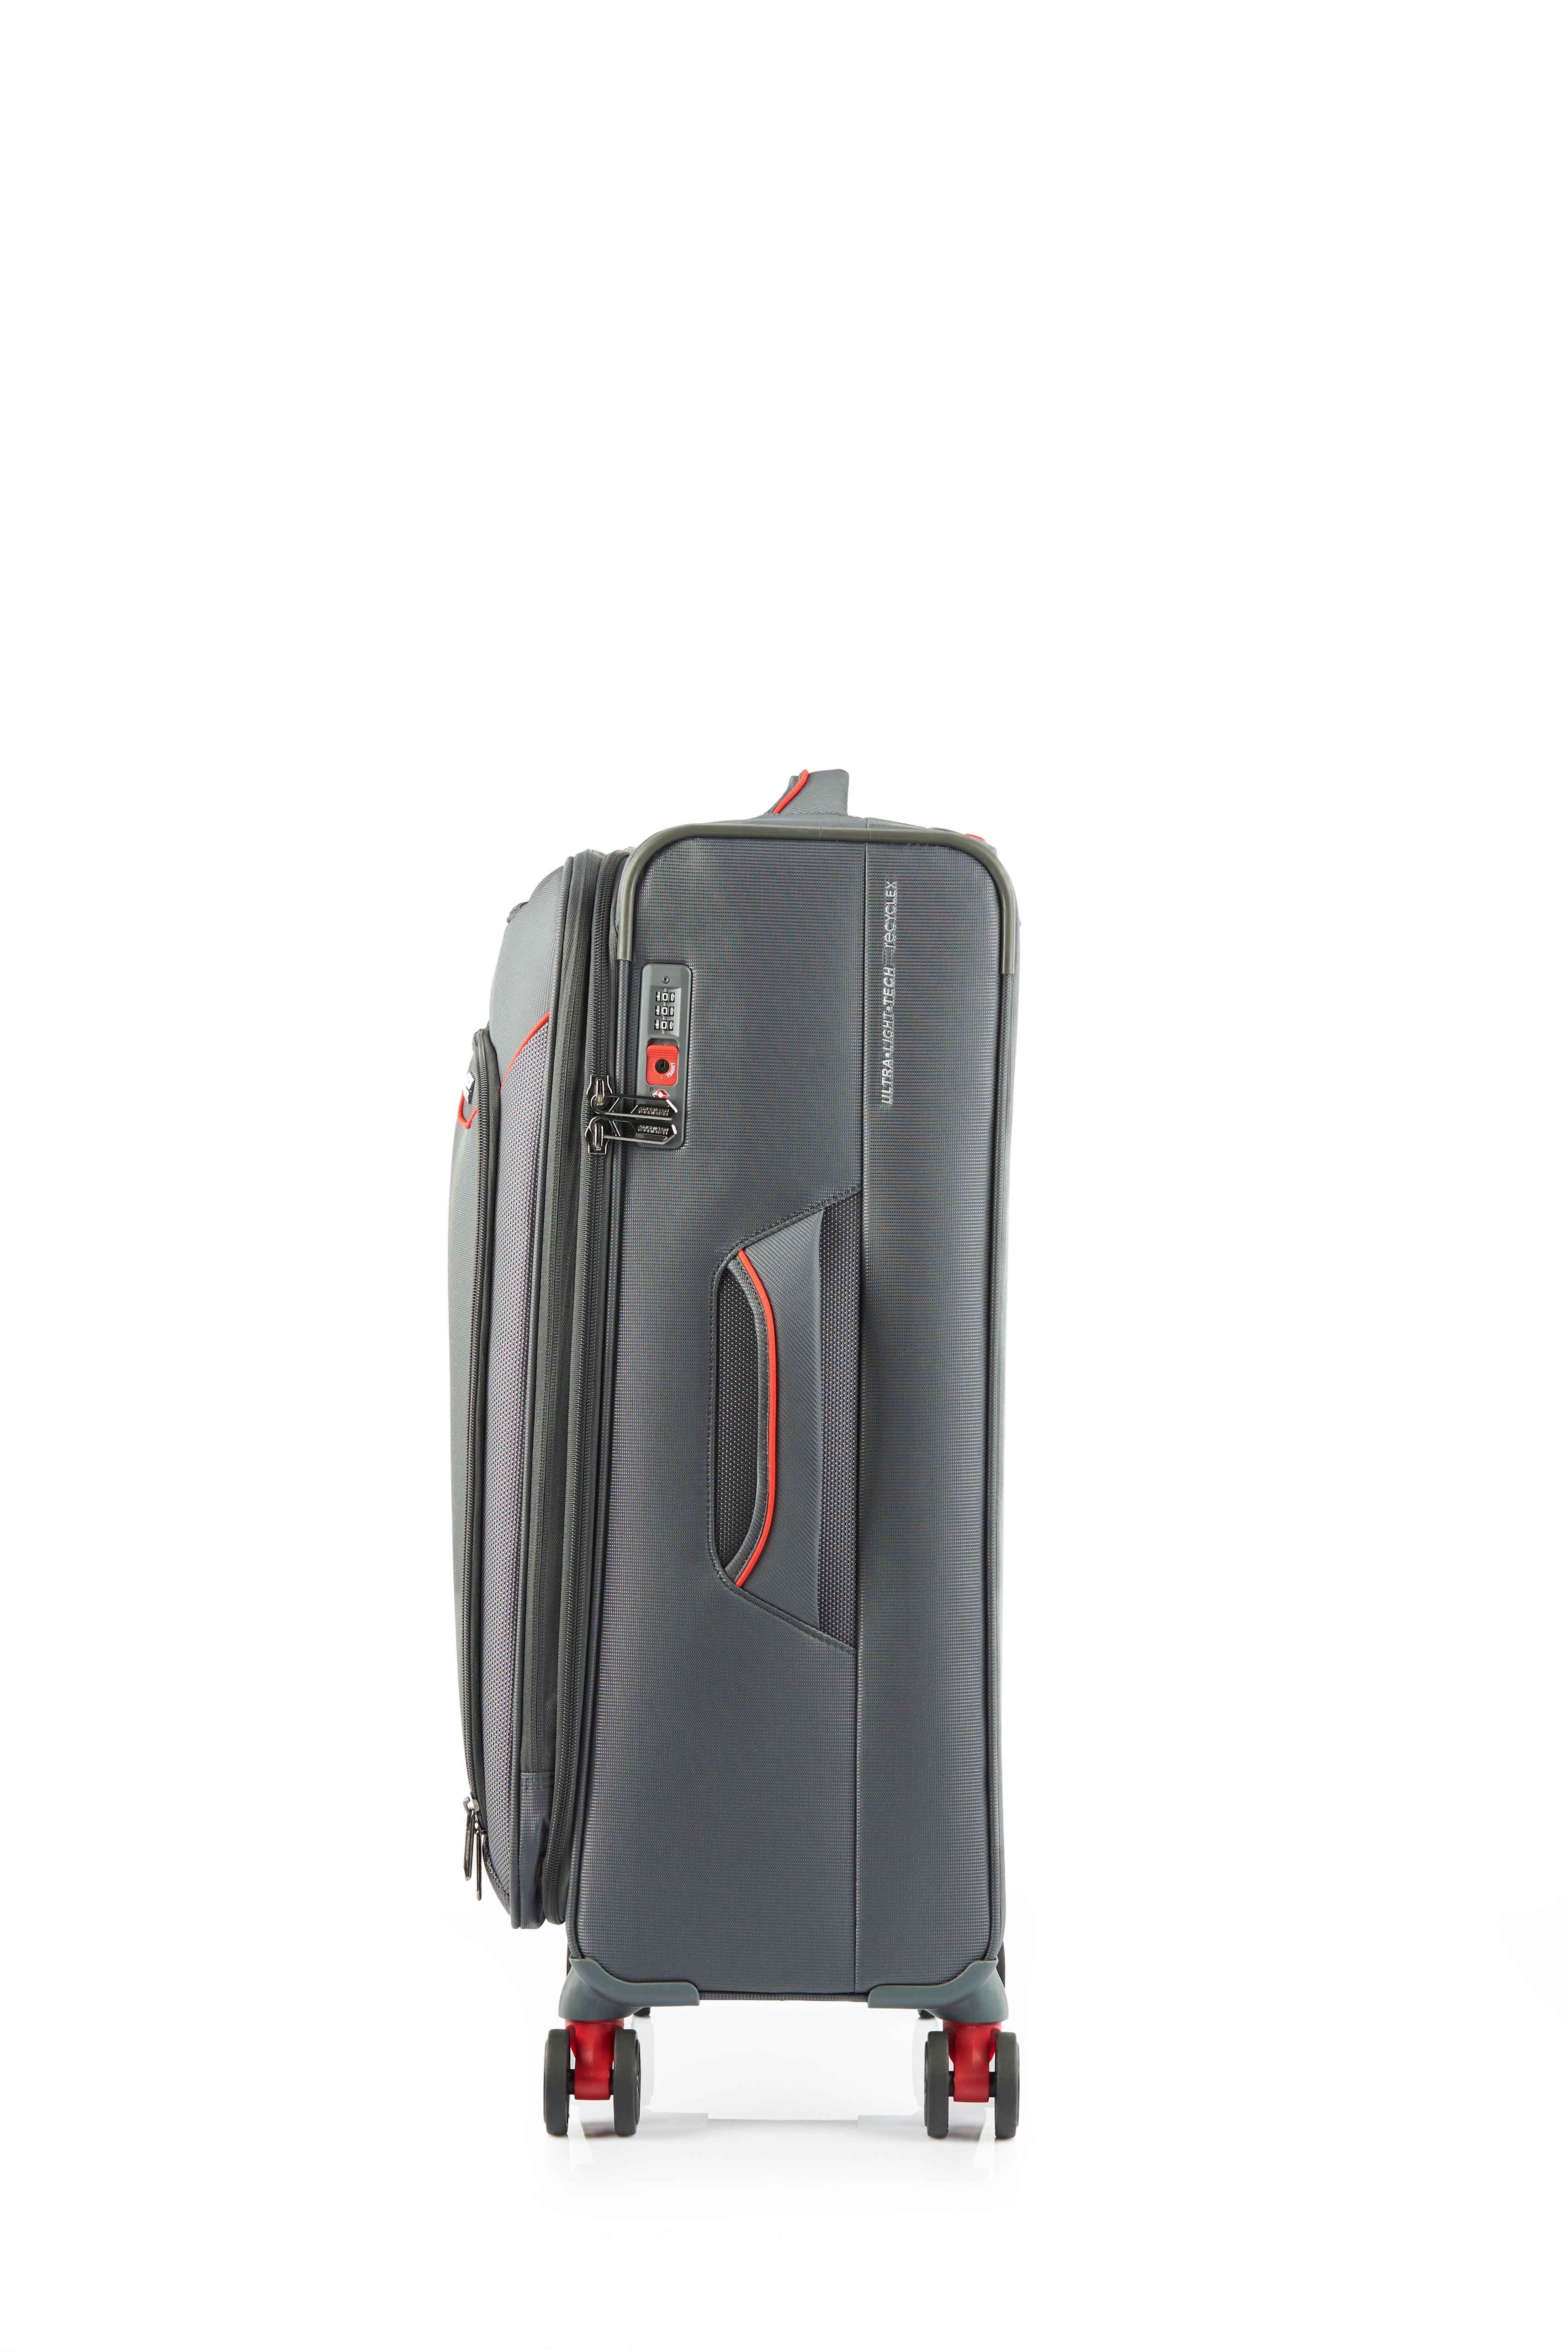 American Tourister - Applite ECO 71cm Medium Suitcase - Grey/Red-4